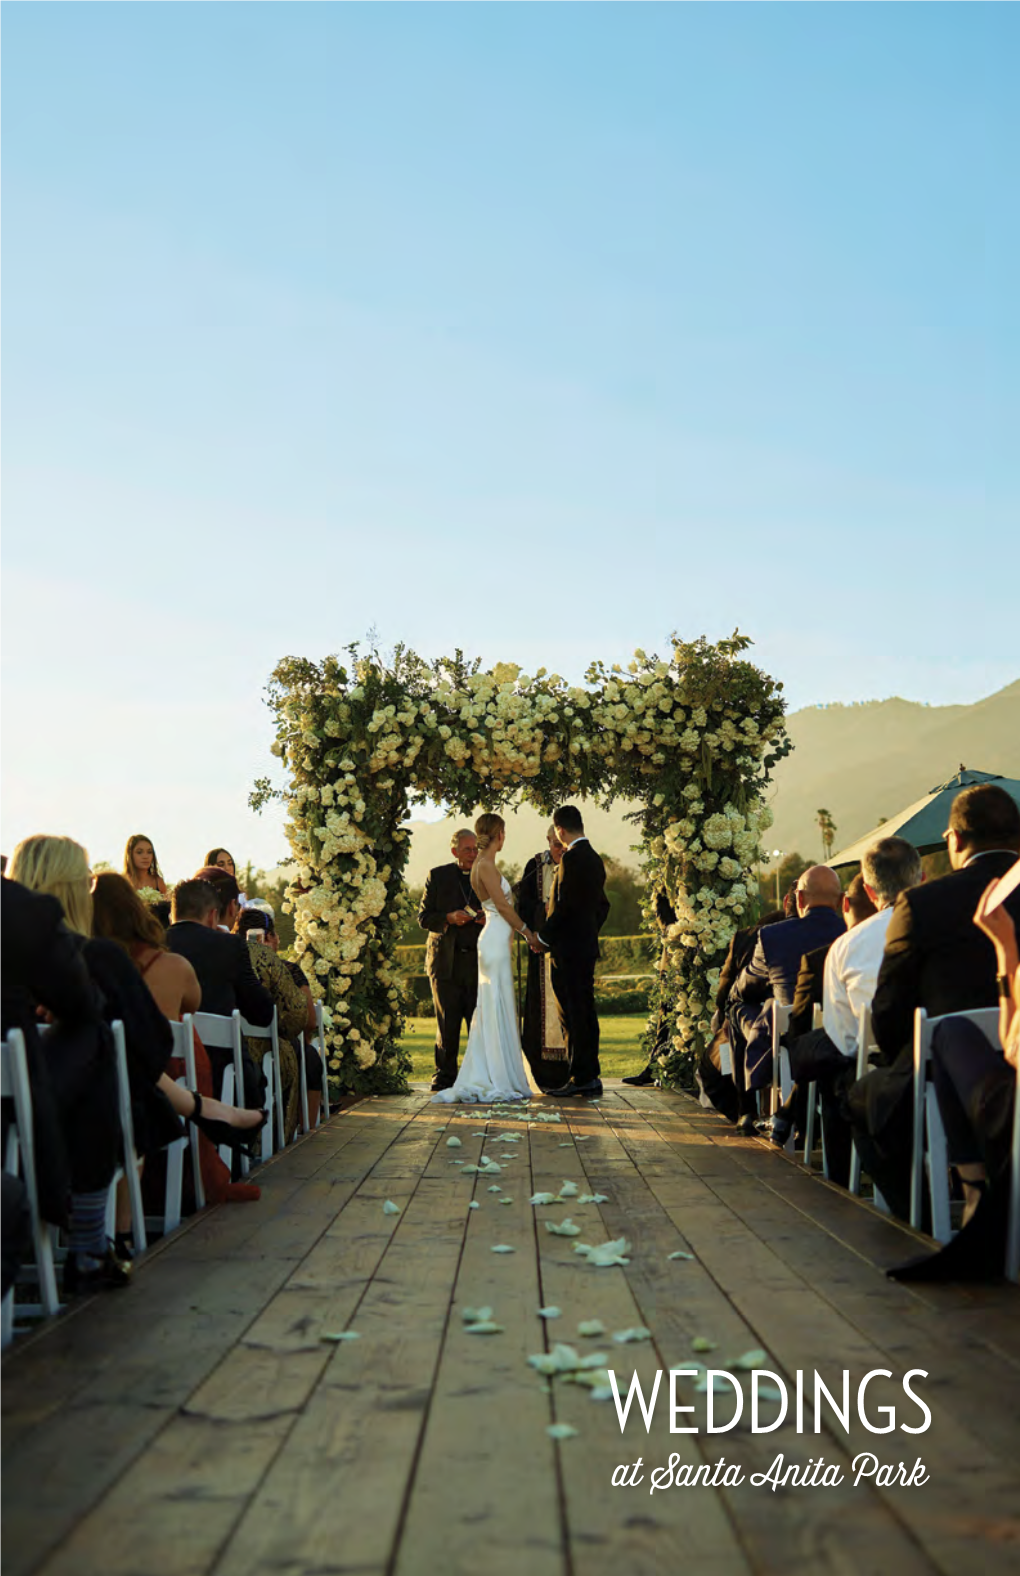 WEDDINGS at Santa Anita Park Congratulations Thank You for Considering Santa Anita Park for Your Wedding Venue